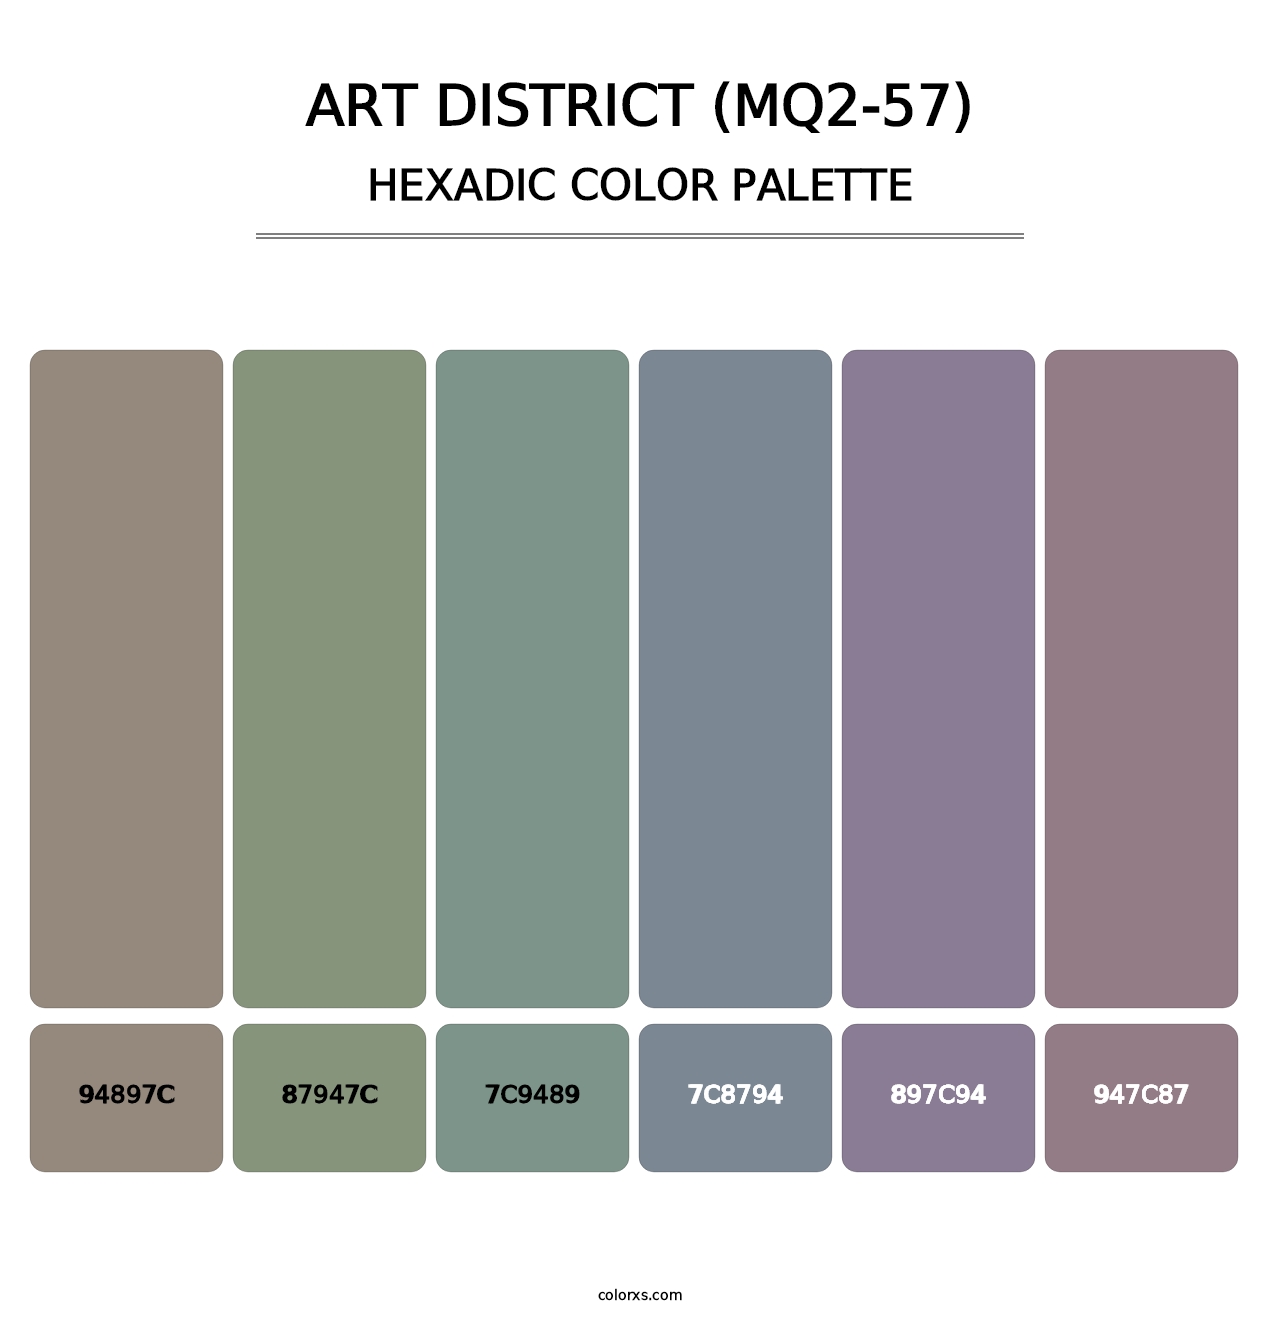 Art District (MQ2-57) - Hexadic Color Palette